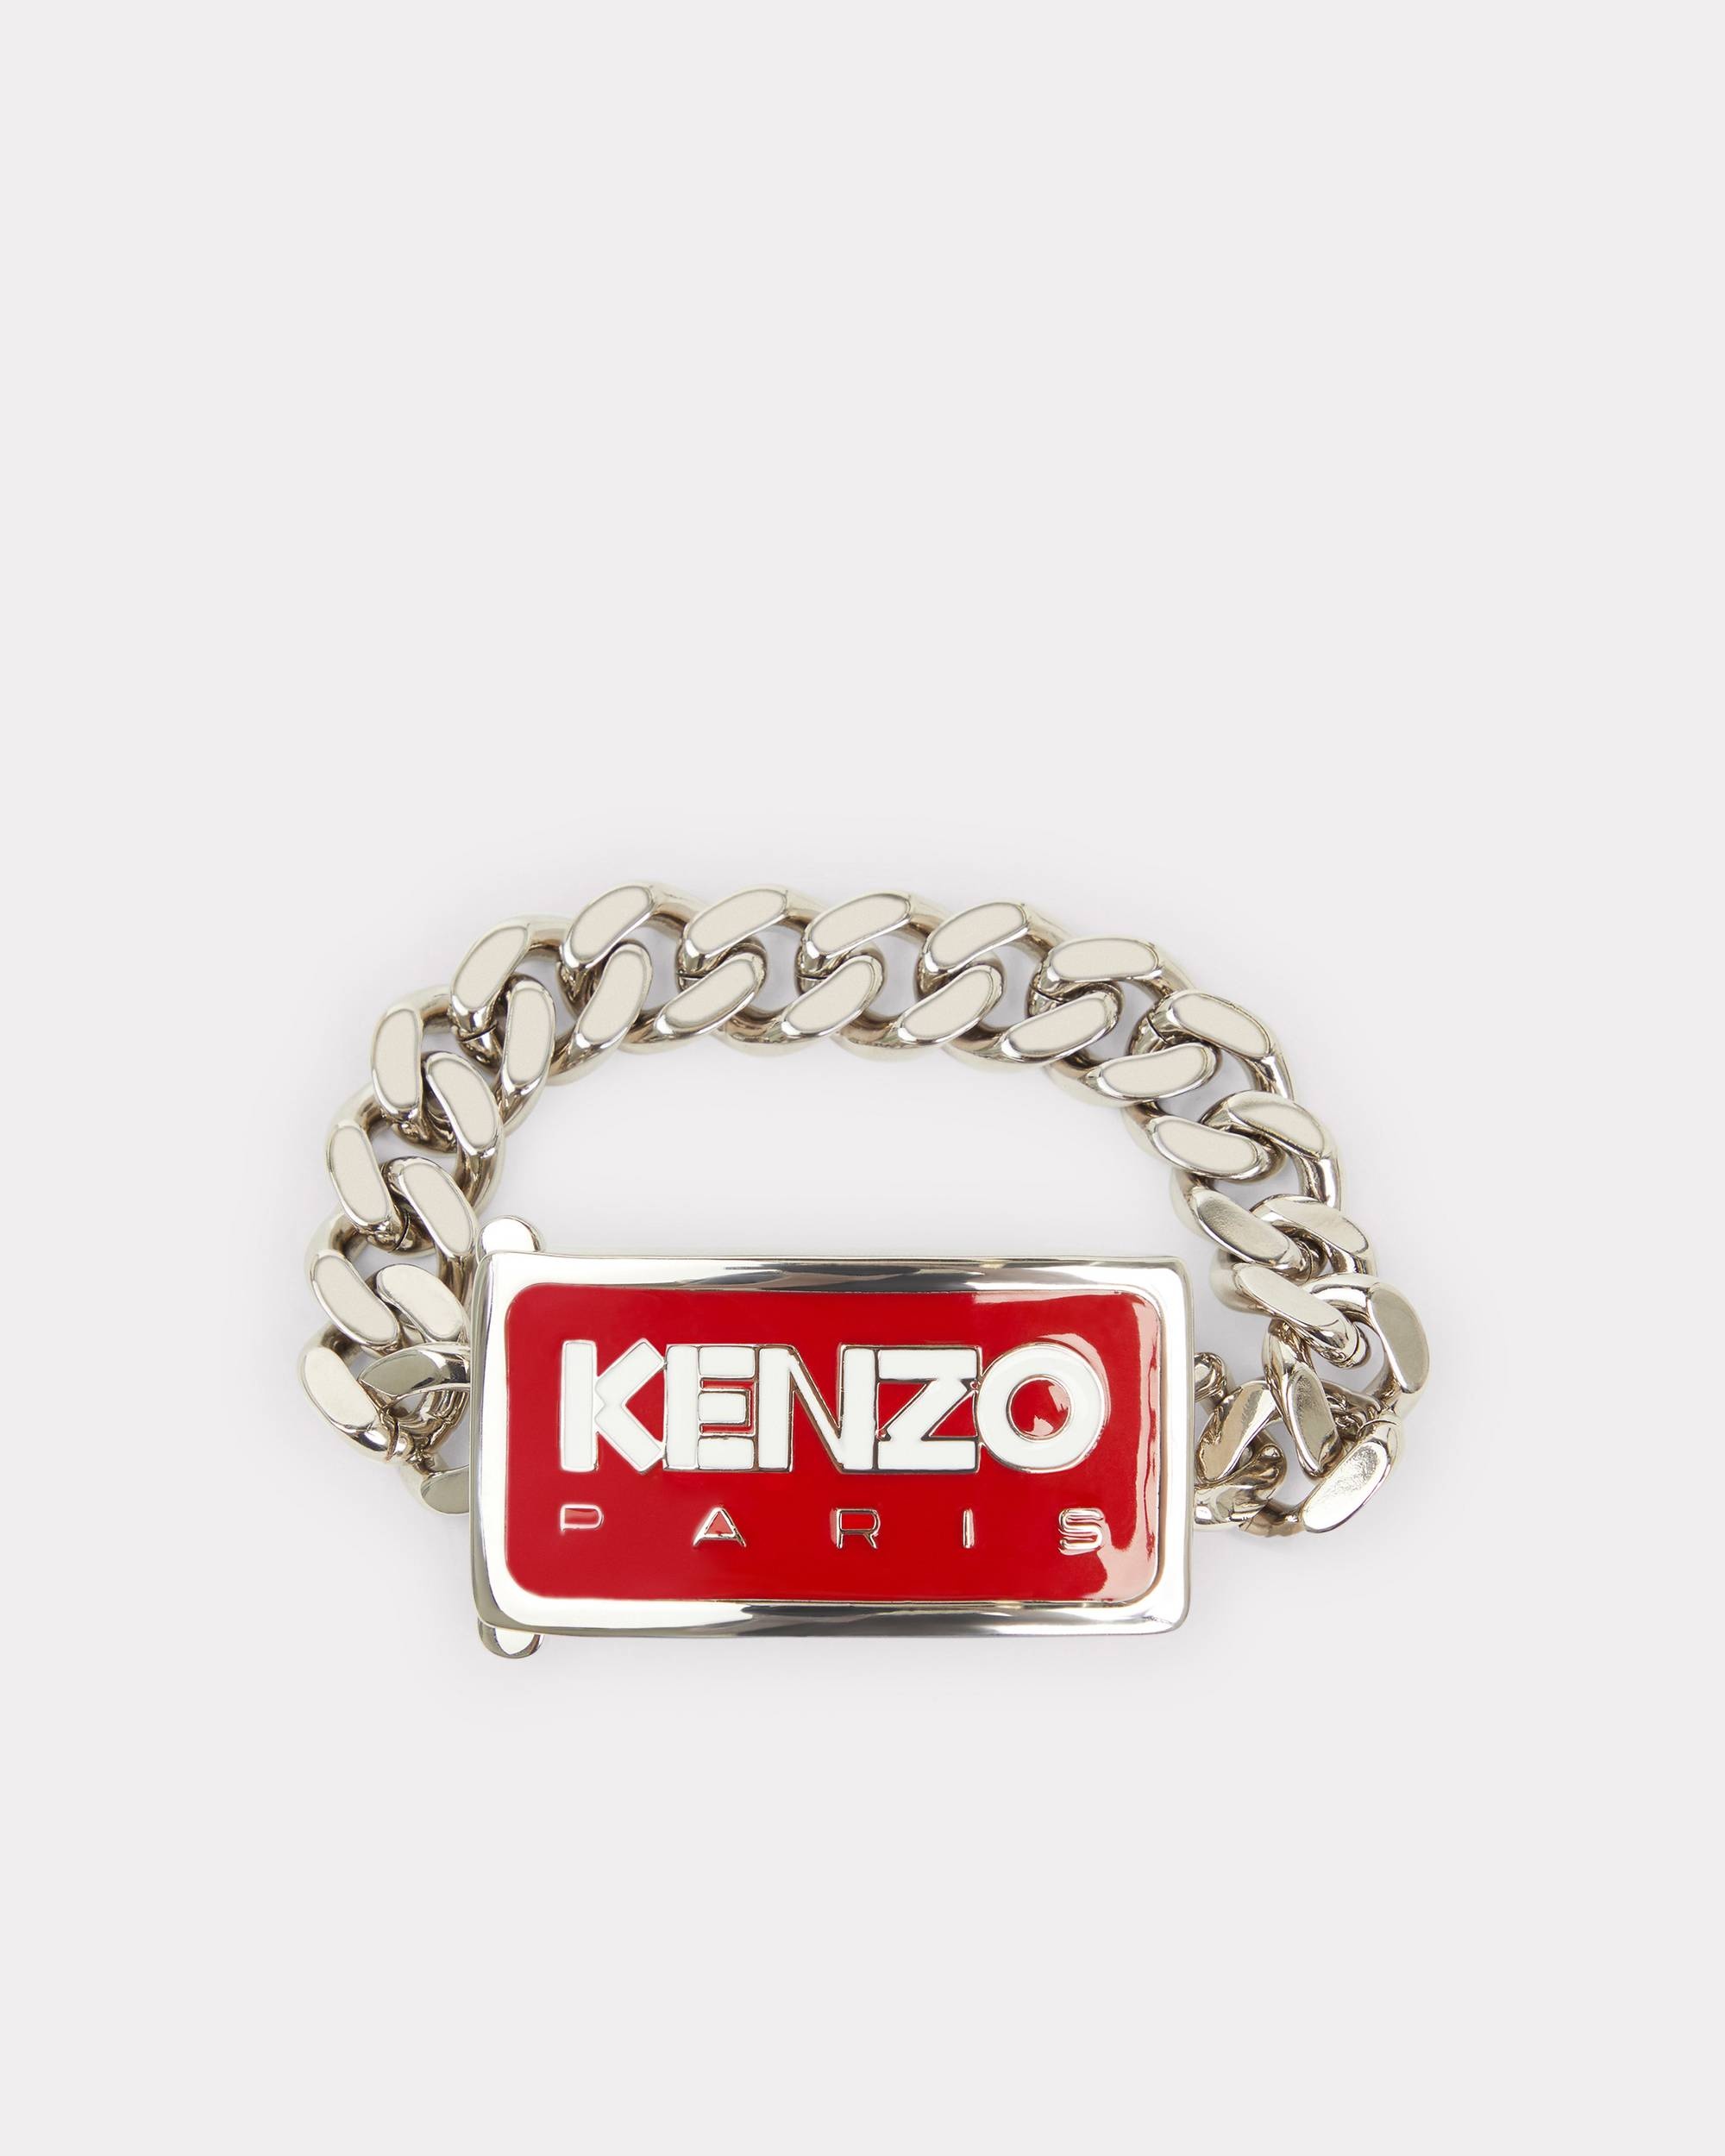 KENZO Paris bracelet - 1